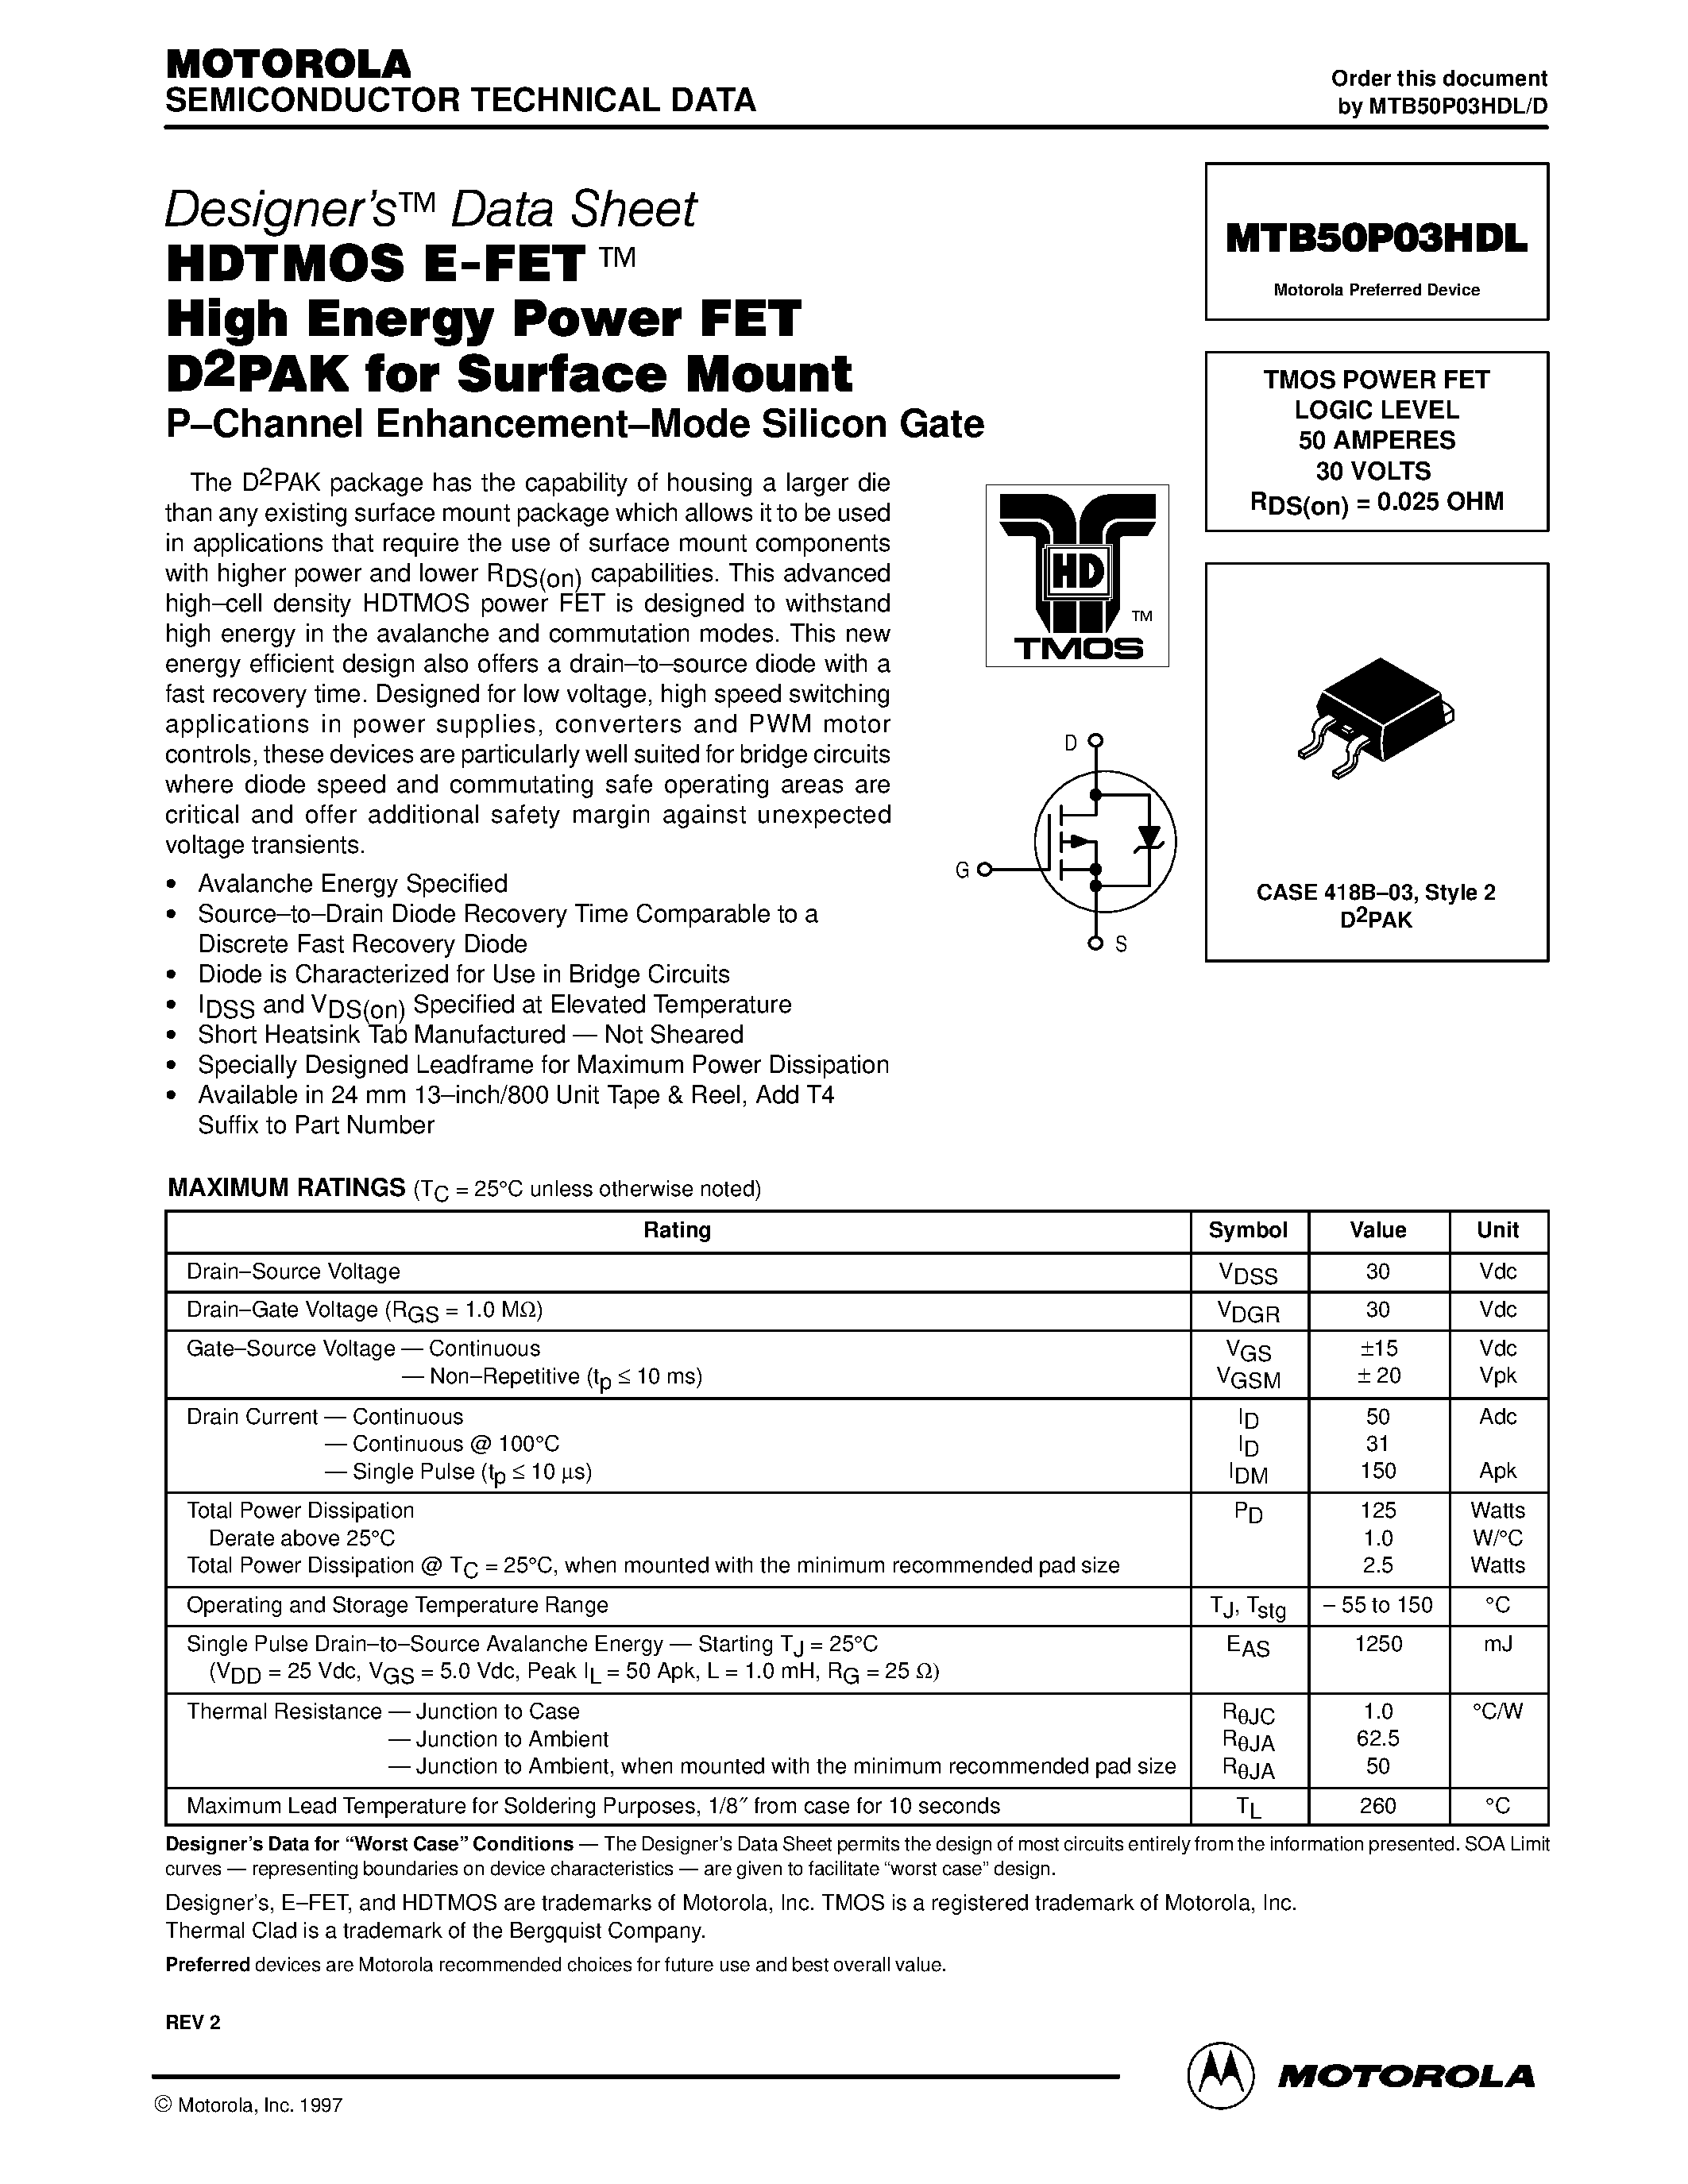 Даташит MTB50P03HDL - TMOS POWER FET LOGIC LEVEL 50 AMPERES 30 VOLTS страница 1